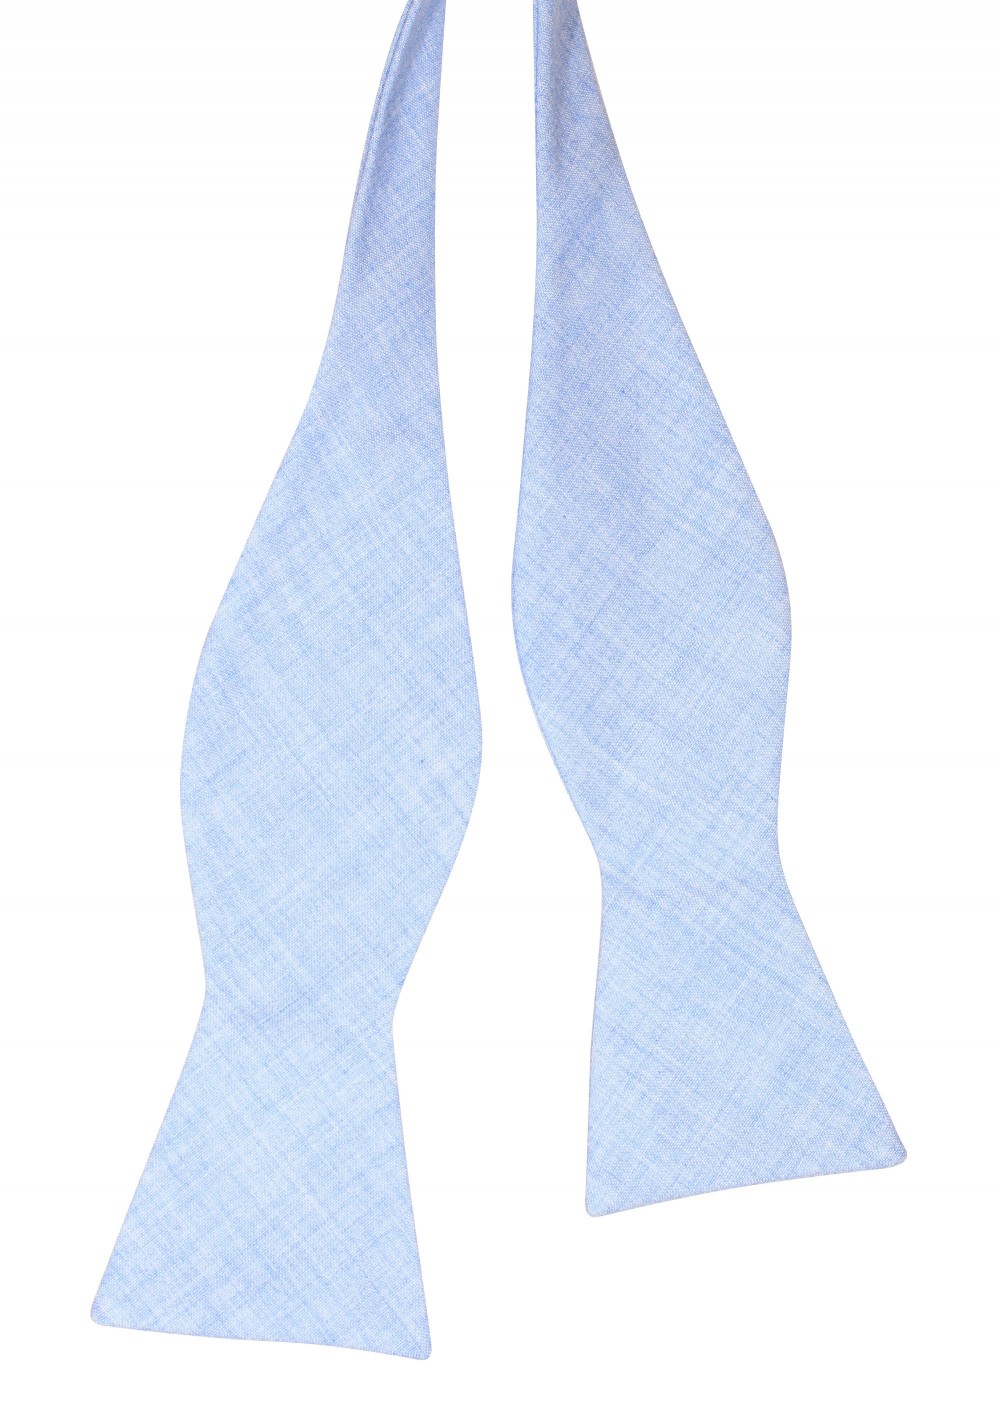 Sky Blue Bow Tie | Self-Tie Cotton Bow Tie in Sky Blue | Bows-N-Ties.com